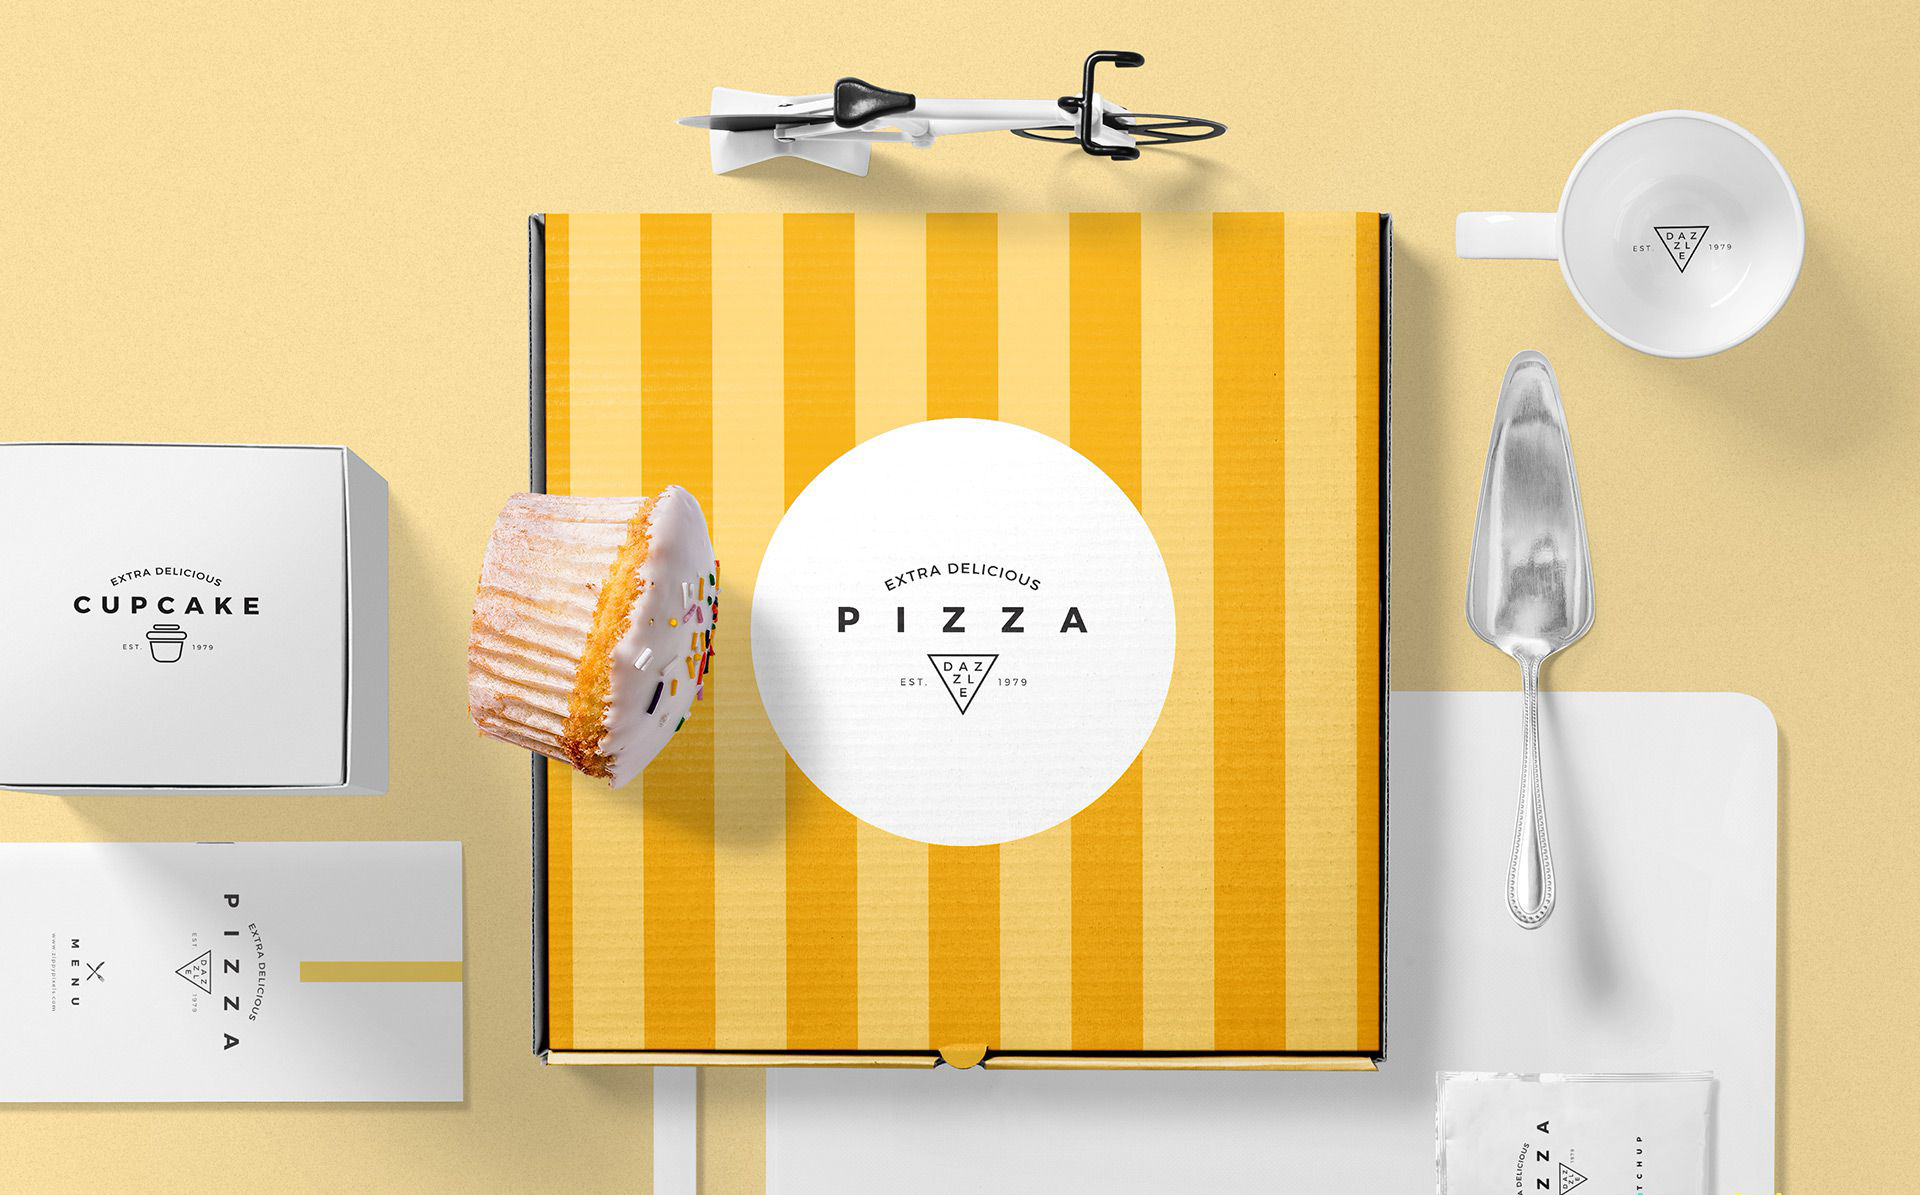 披萨包装样机现场 Pizza Packaging Mockup Scene插图3